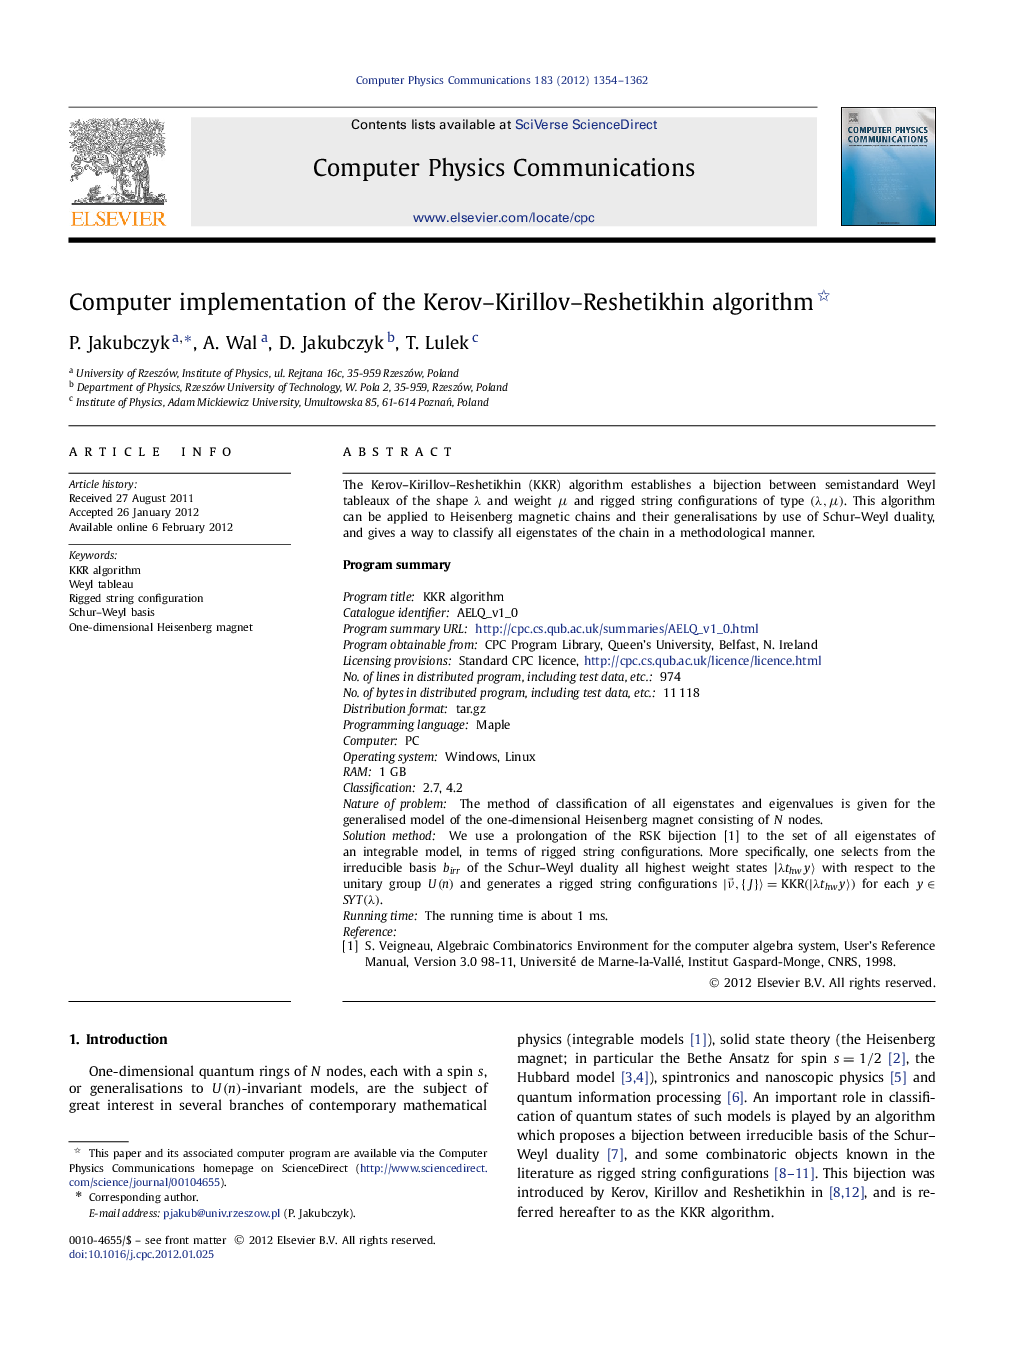 Computer implementation of the Kerov–Kirillov–Reshetikhin algorithm 